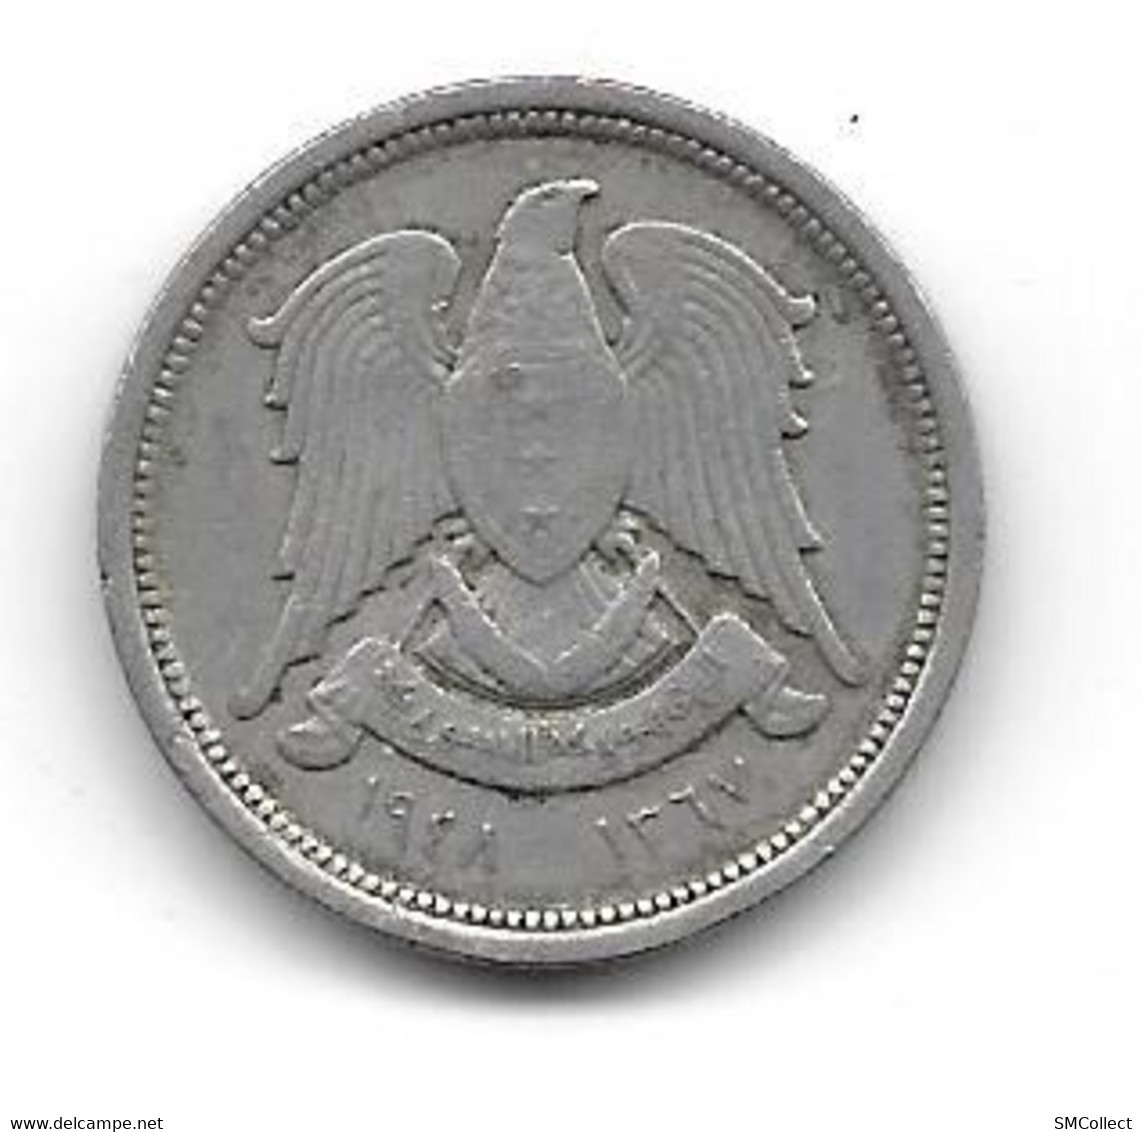 Lot de 4 monnaies : Maurice / Roumanie / Algérie / Syrie (236)